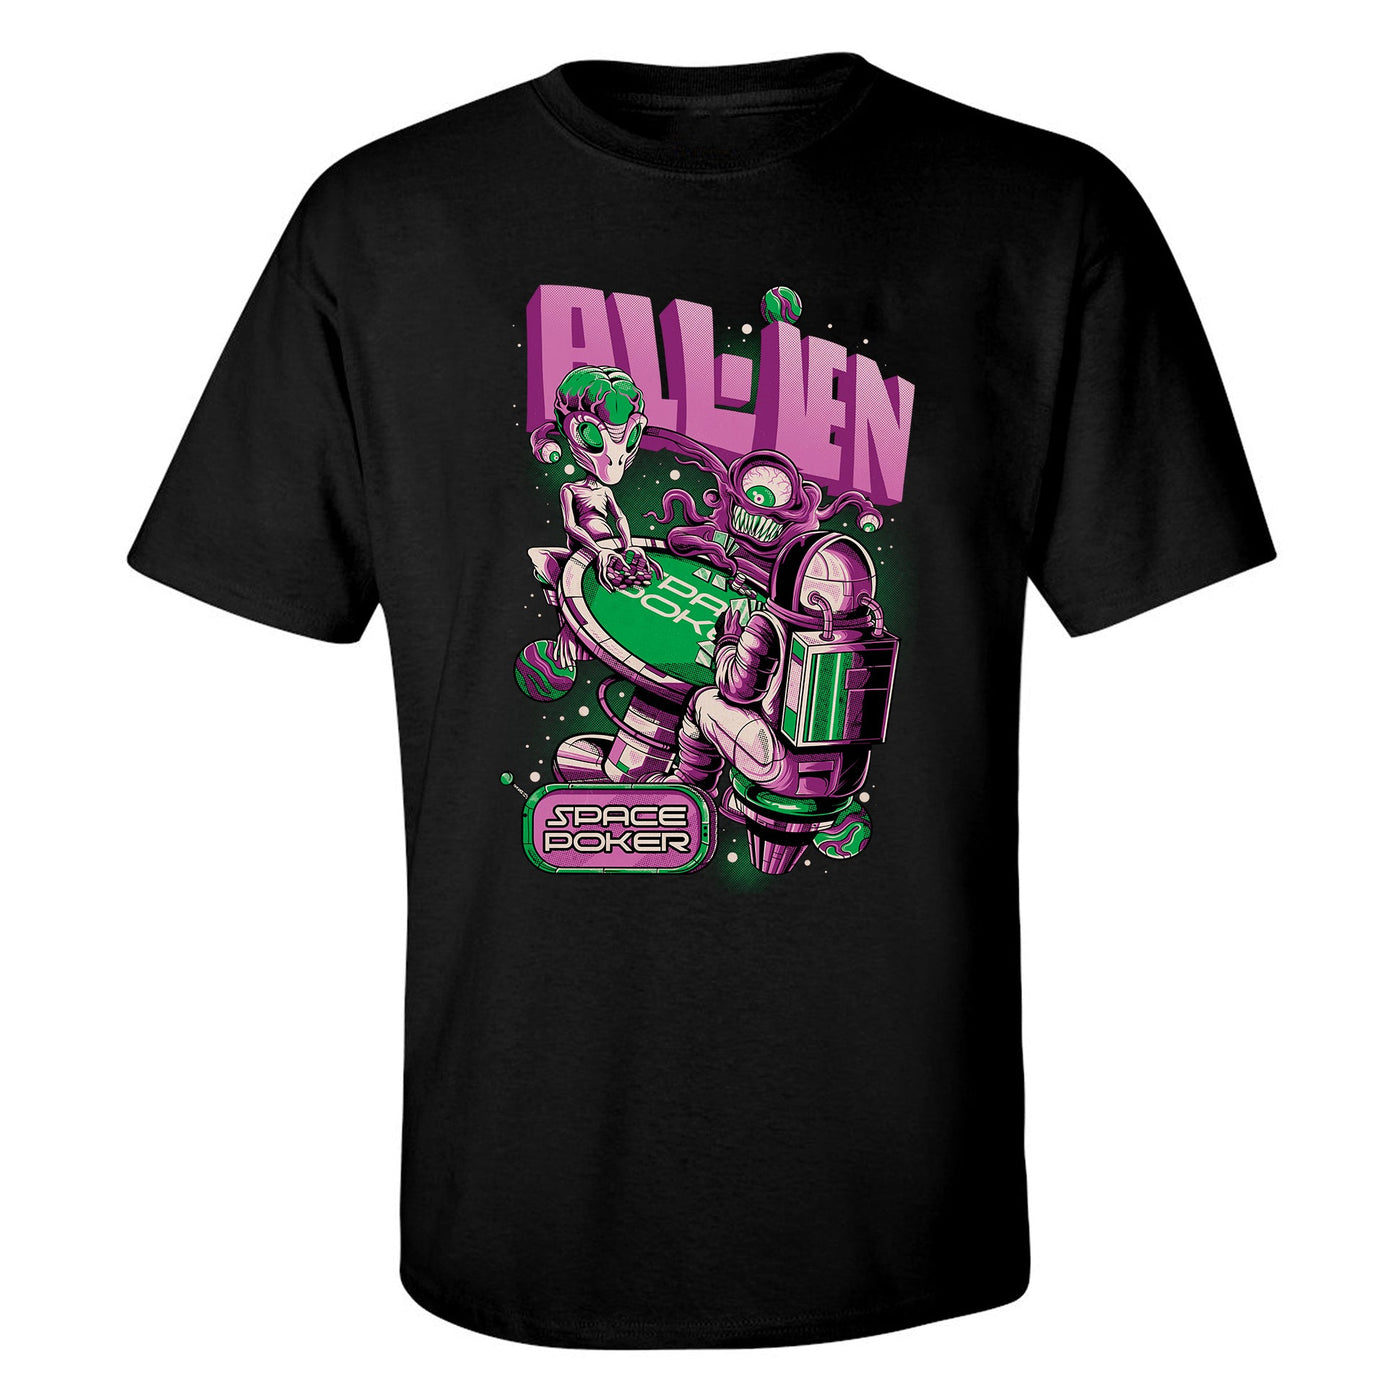 SPECIAL "Alien Space Poker" Short Sleeve T-Shirt by Rodrigo Tannus